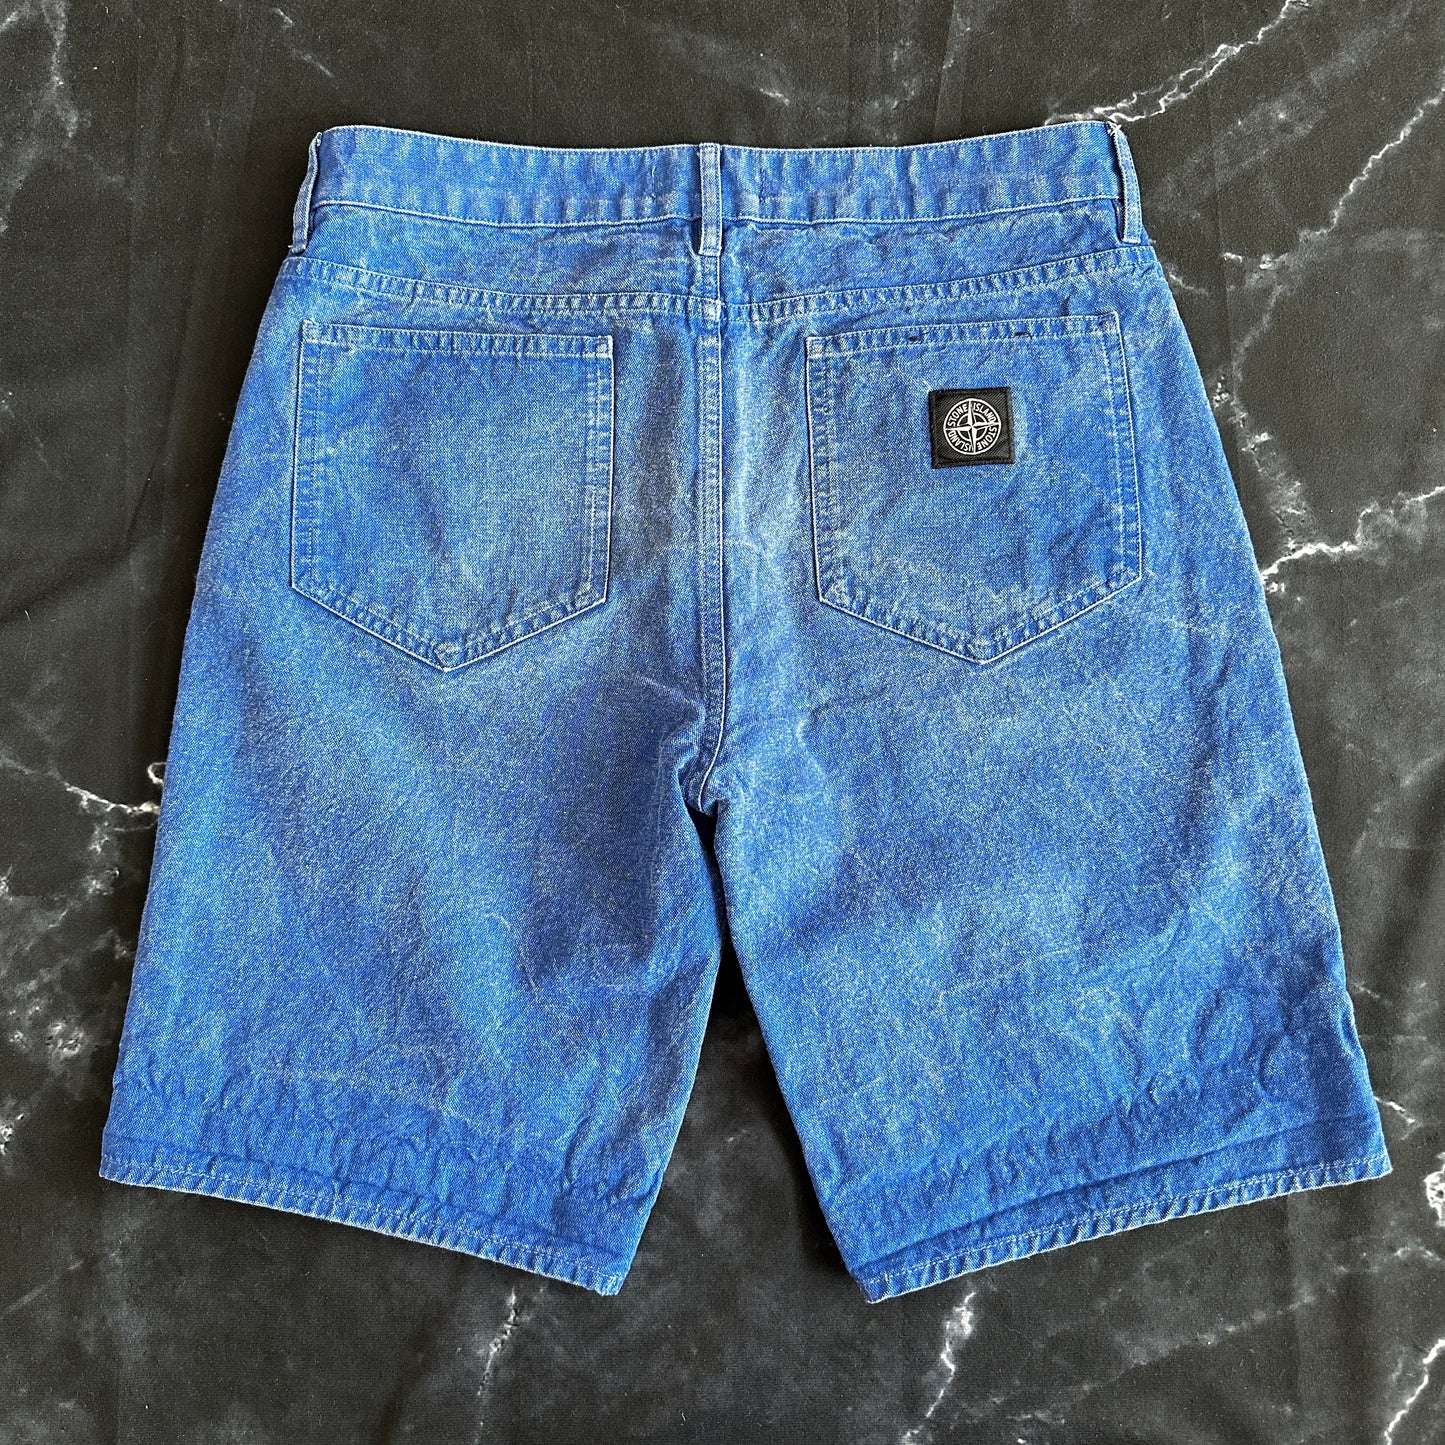 Stone Island Jeans Shorts 2019 - W 31 / M